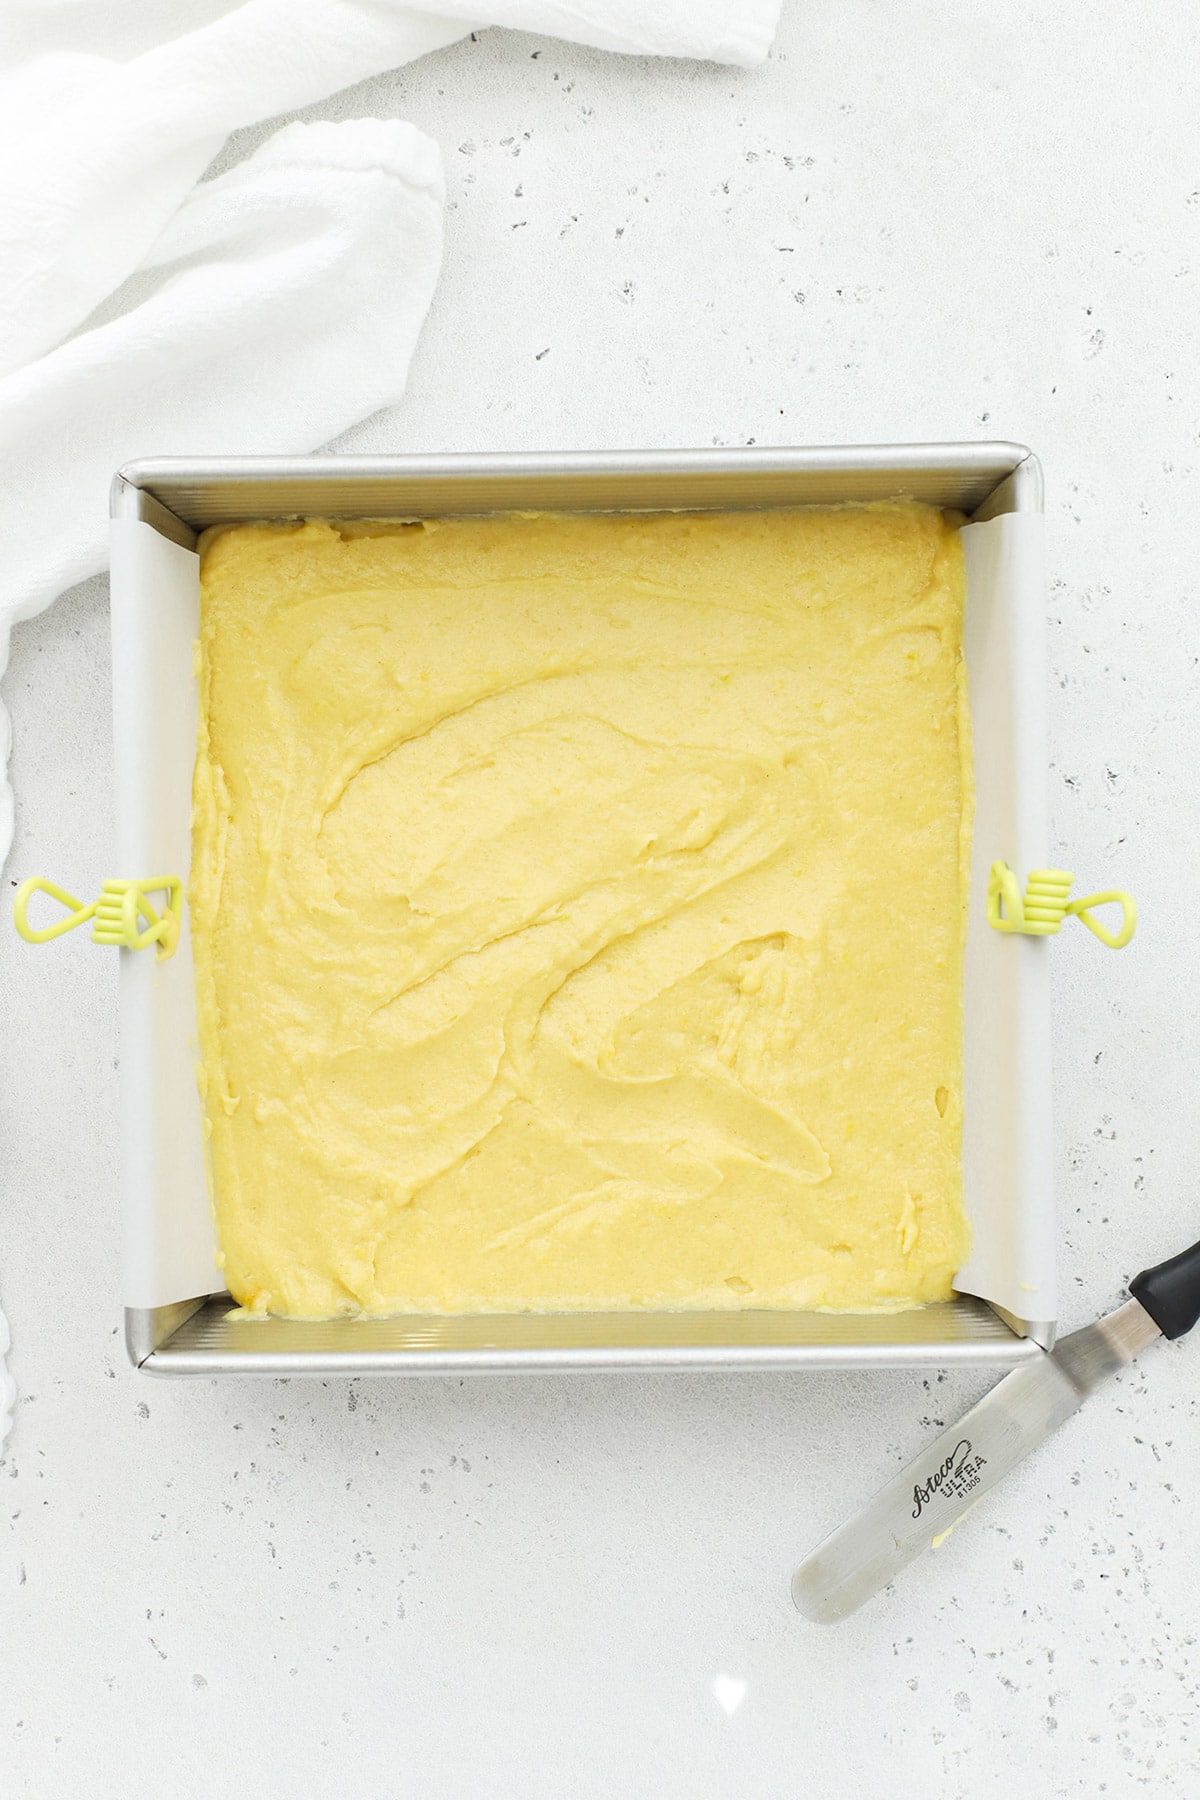 Spreading gluten-free lemon brownie batter into a baking pan